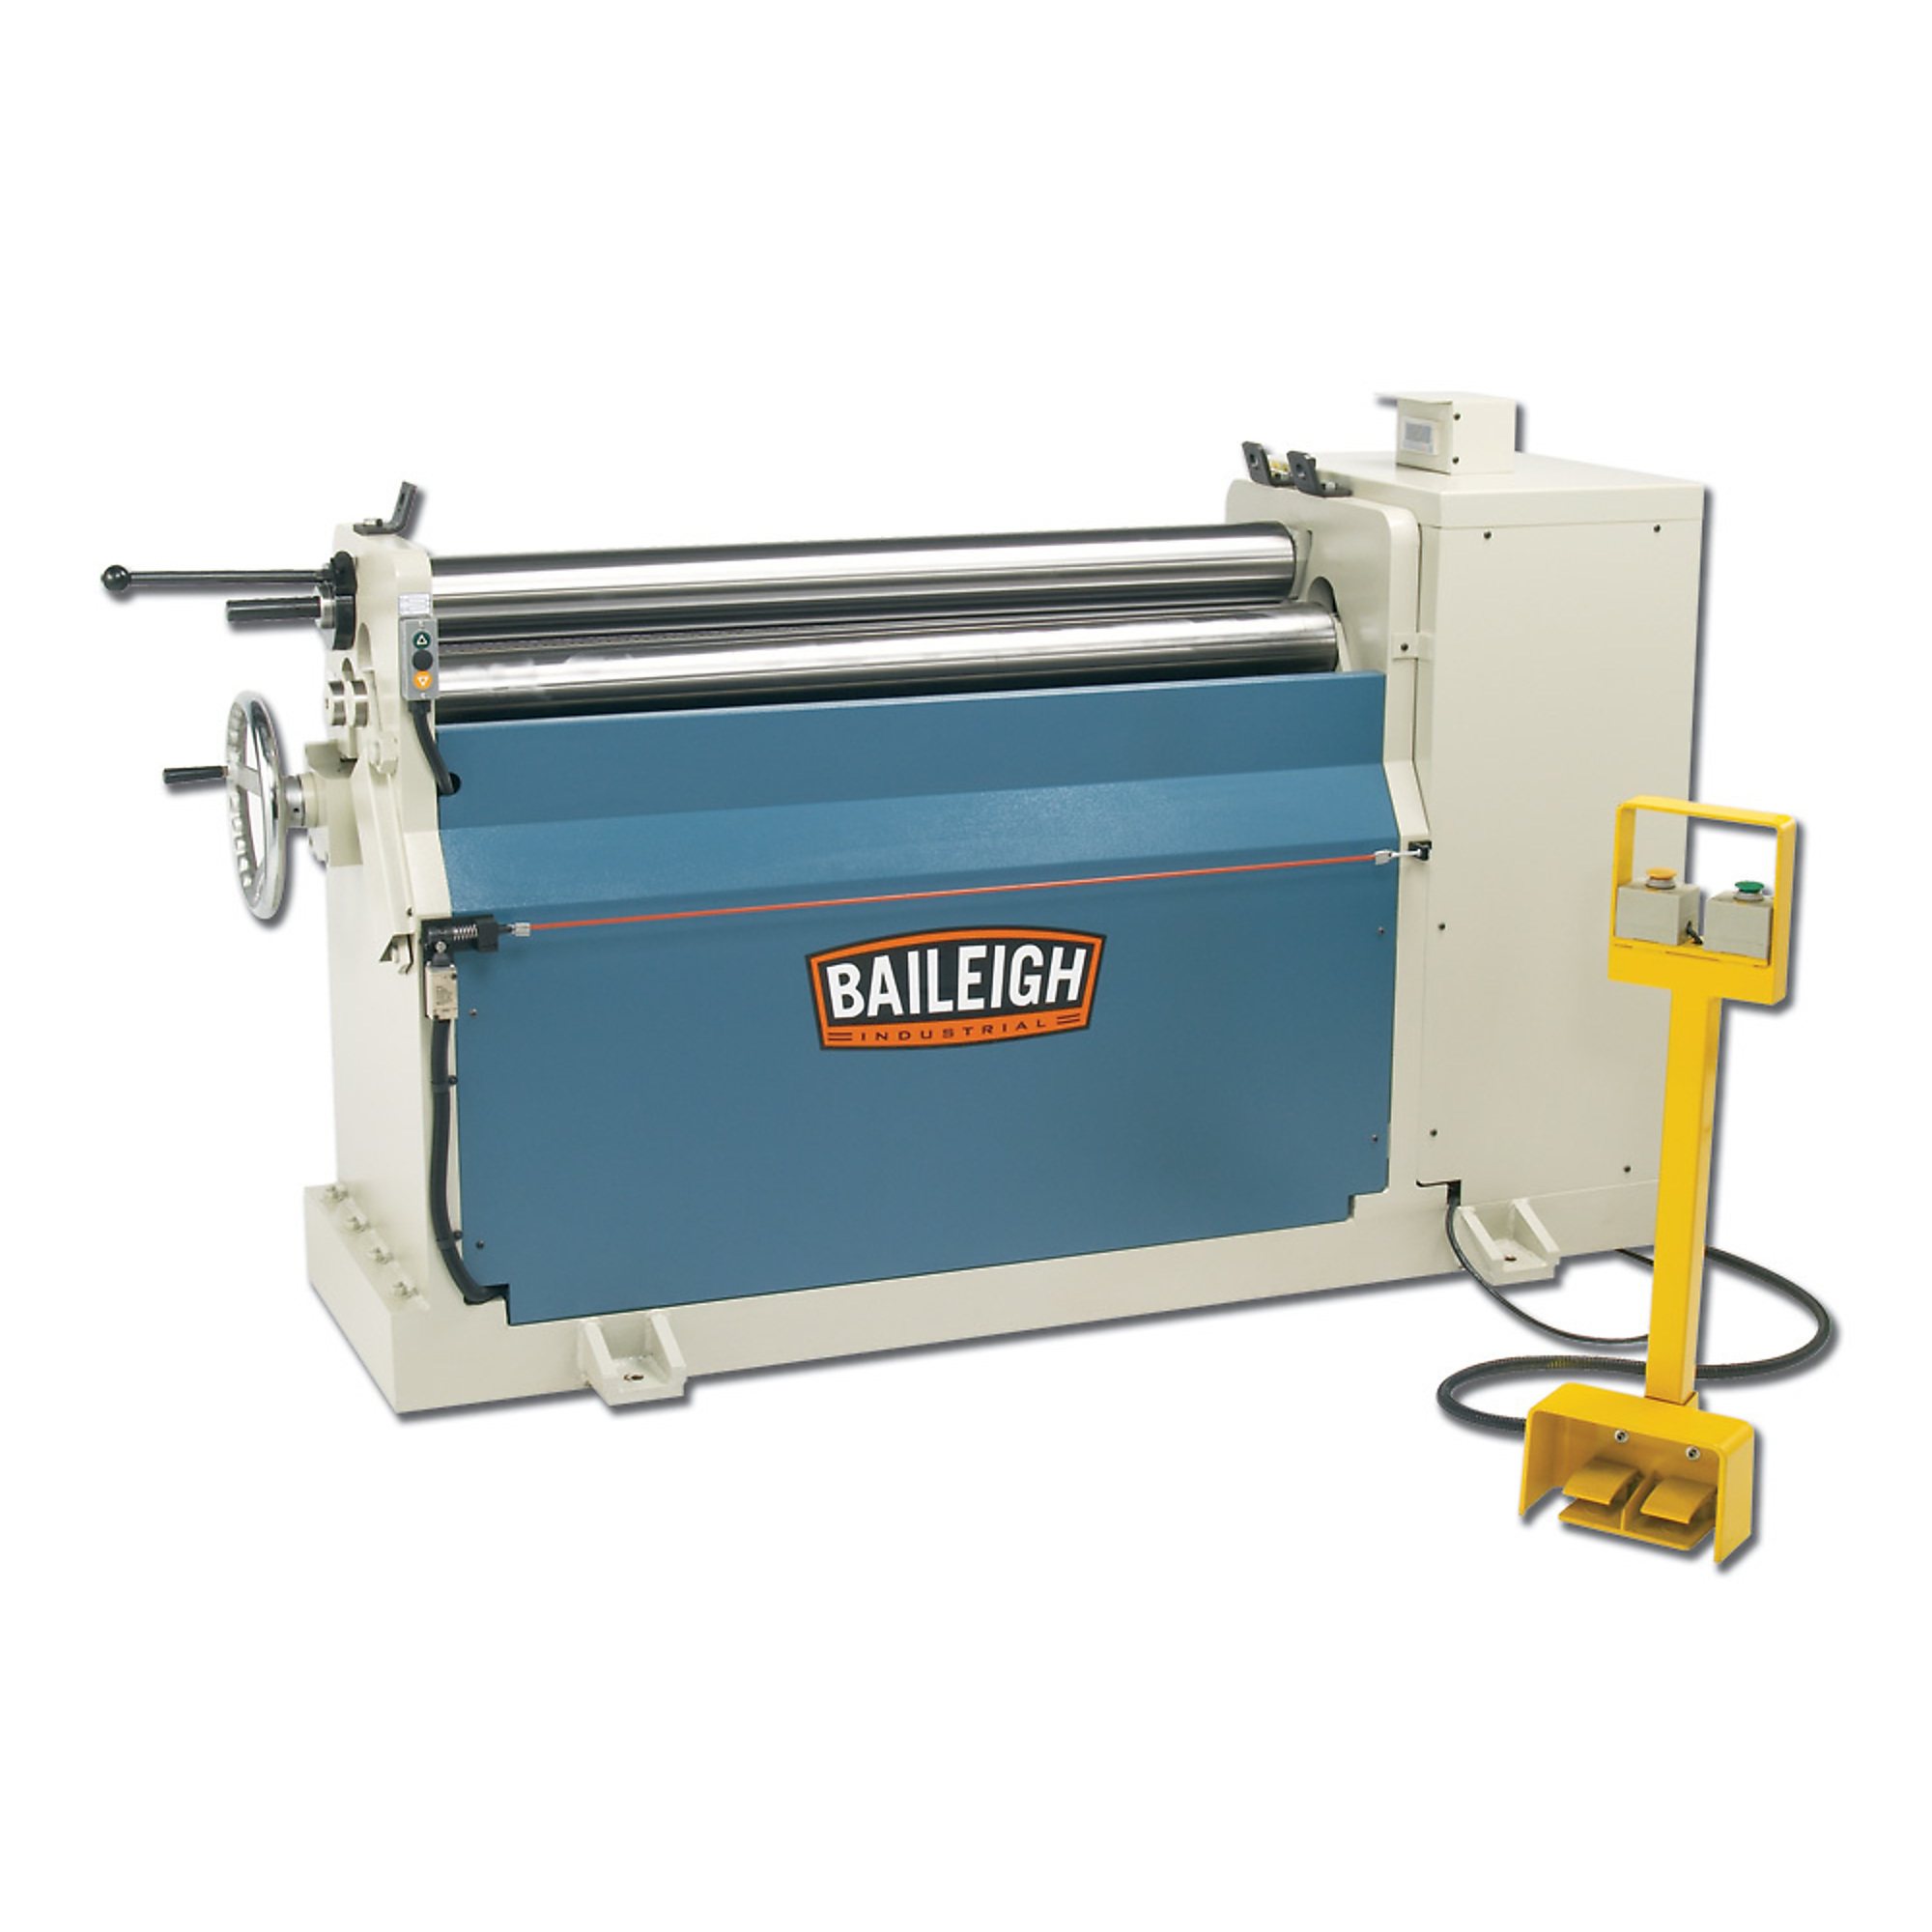 Baileigh, Hydraulic Plate Roller, Max. Material Gauge 9 Model PR-409